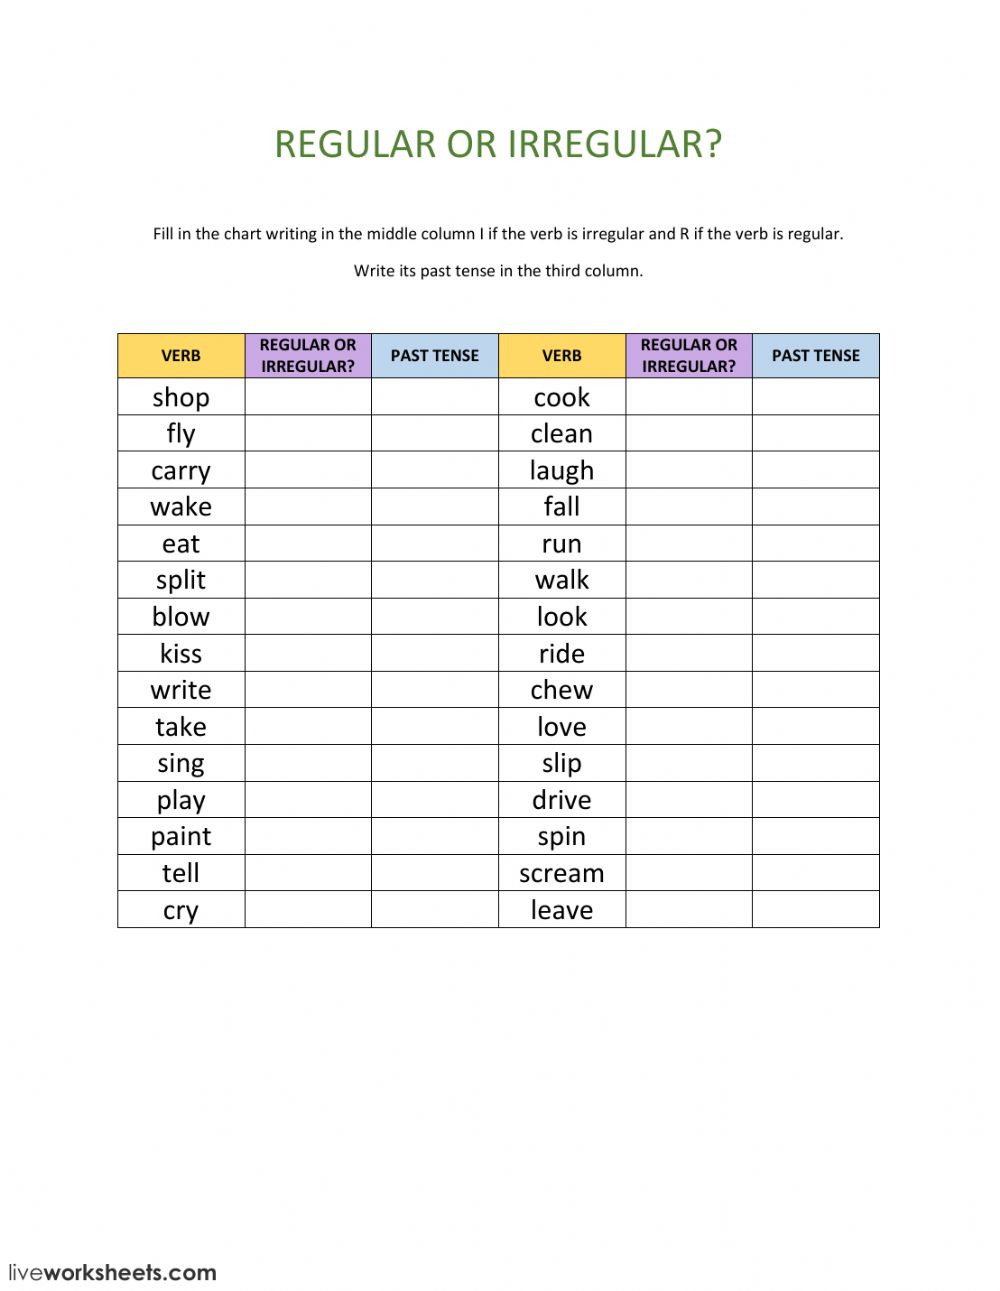 Regular Irregular Verbs Worksheet Db excel